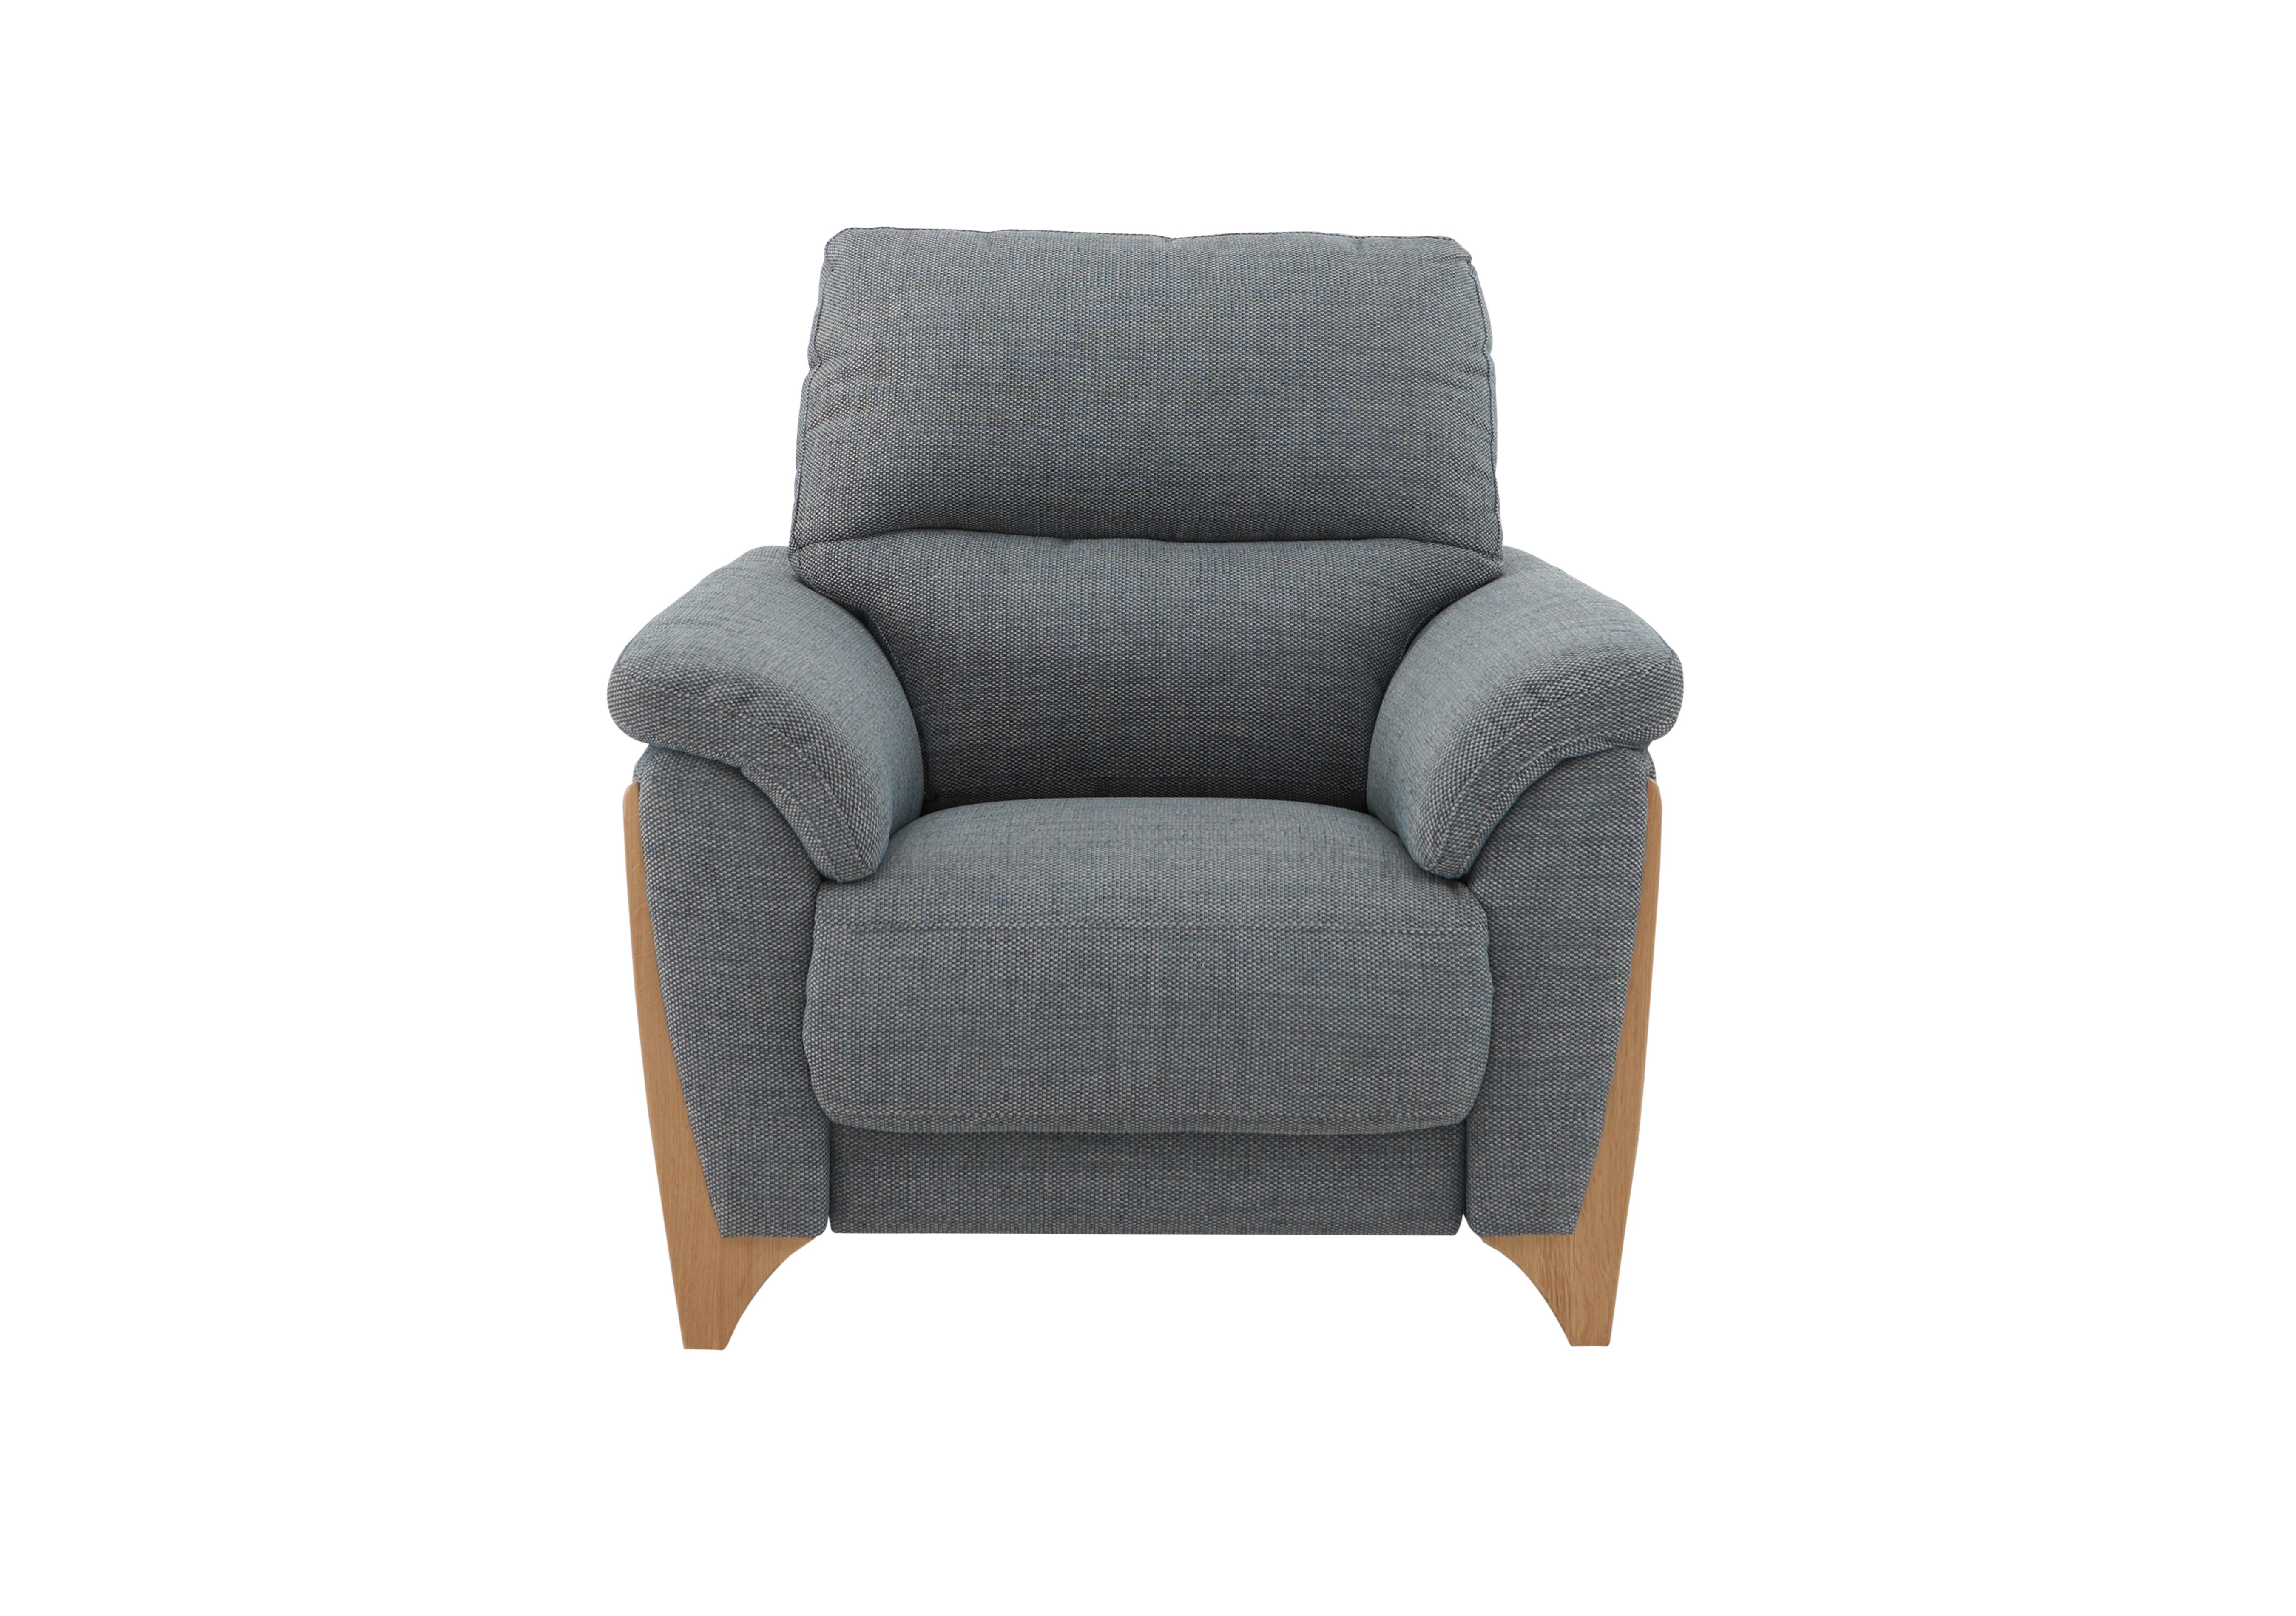 Enna Fabric Armchair in P222 on Furniture Village